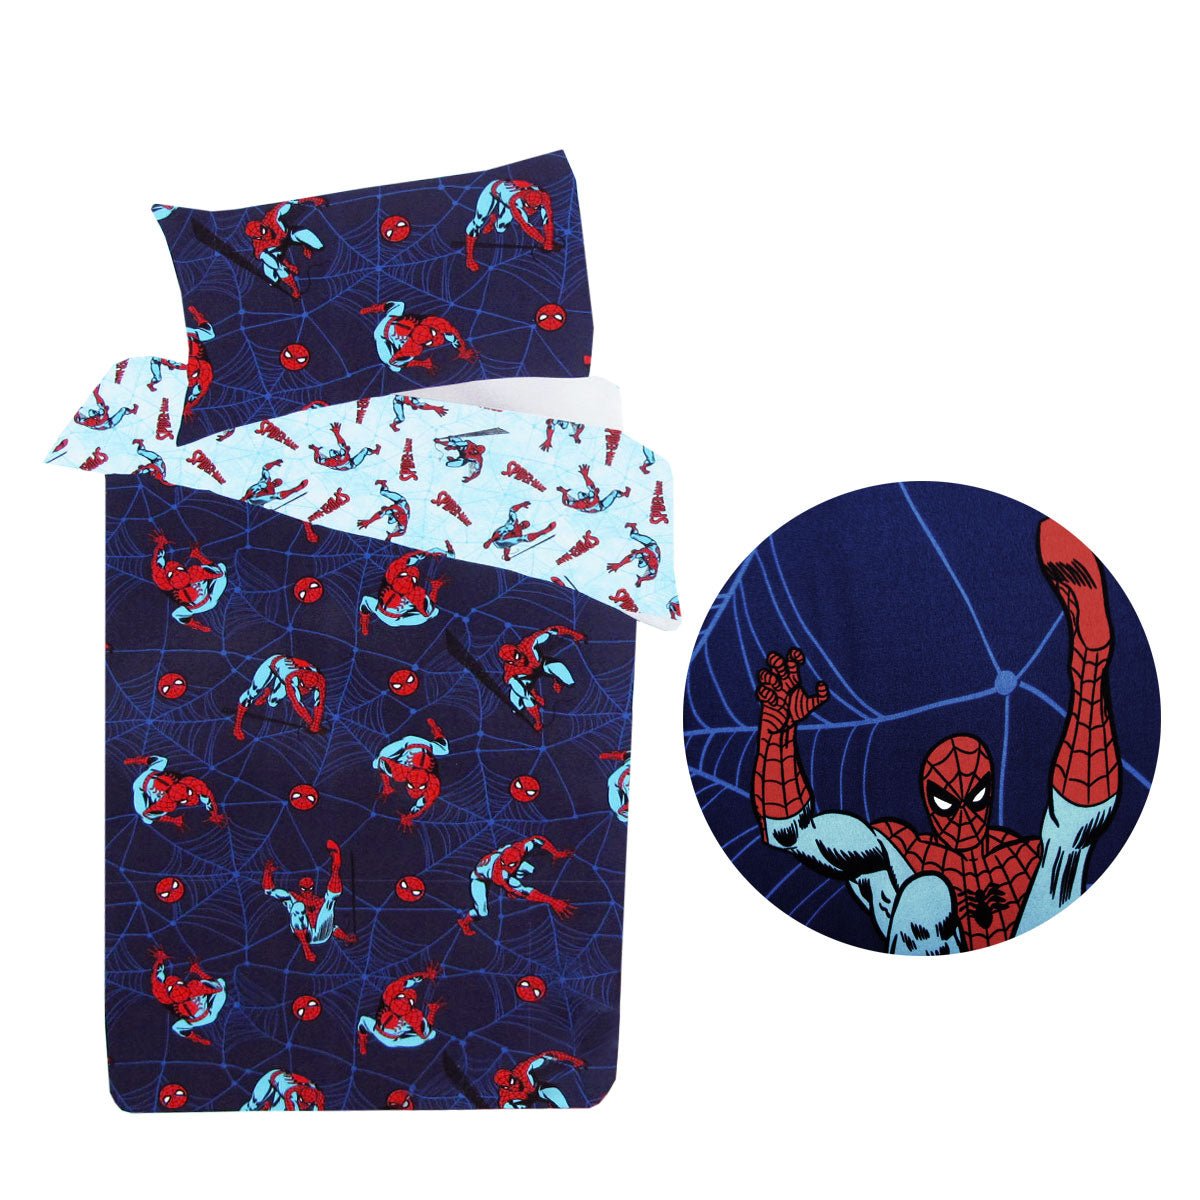 Caprice Marvel Spiderman Reversible Licensed Quilt Cover Set Single - Little Kids Business